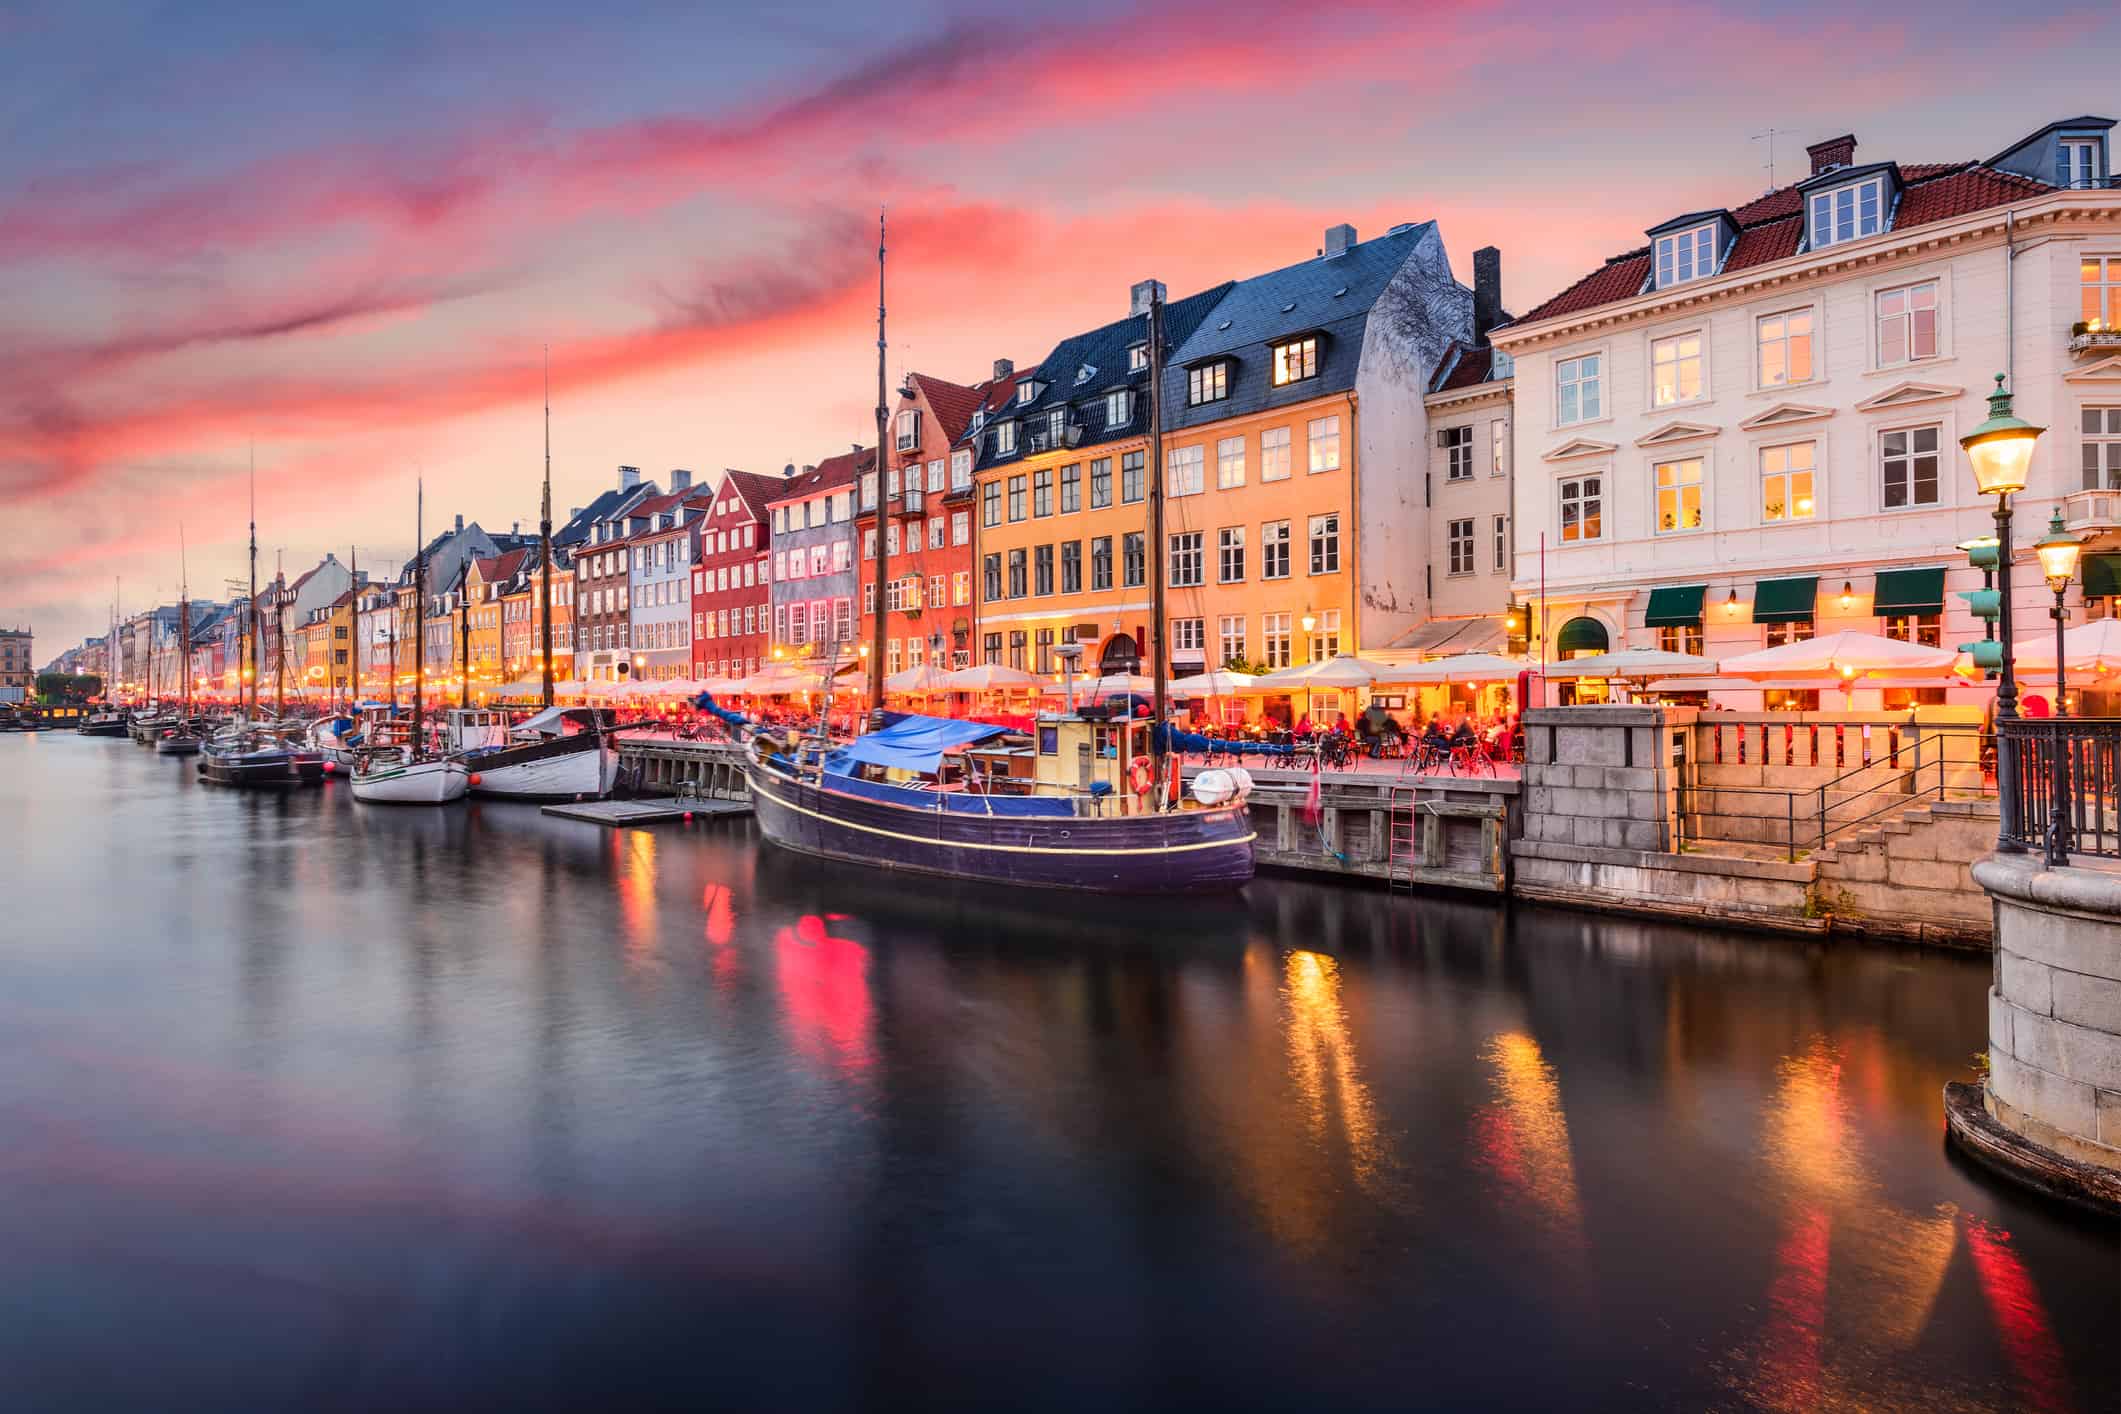 Copenhagen, Denmark at Nyhavn Canal